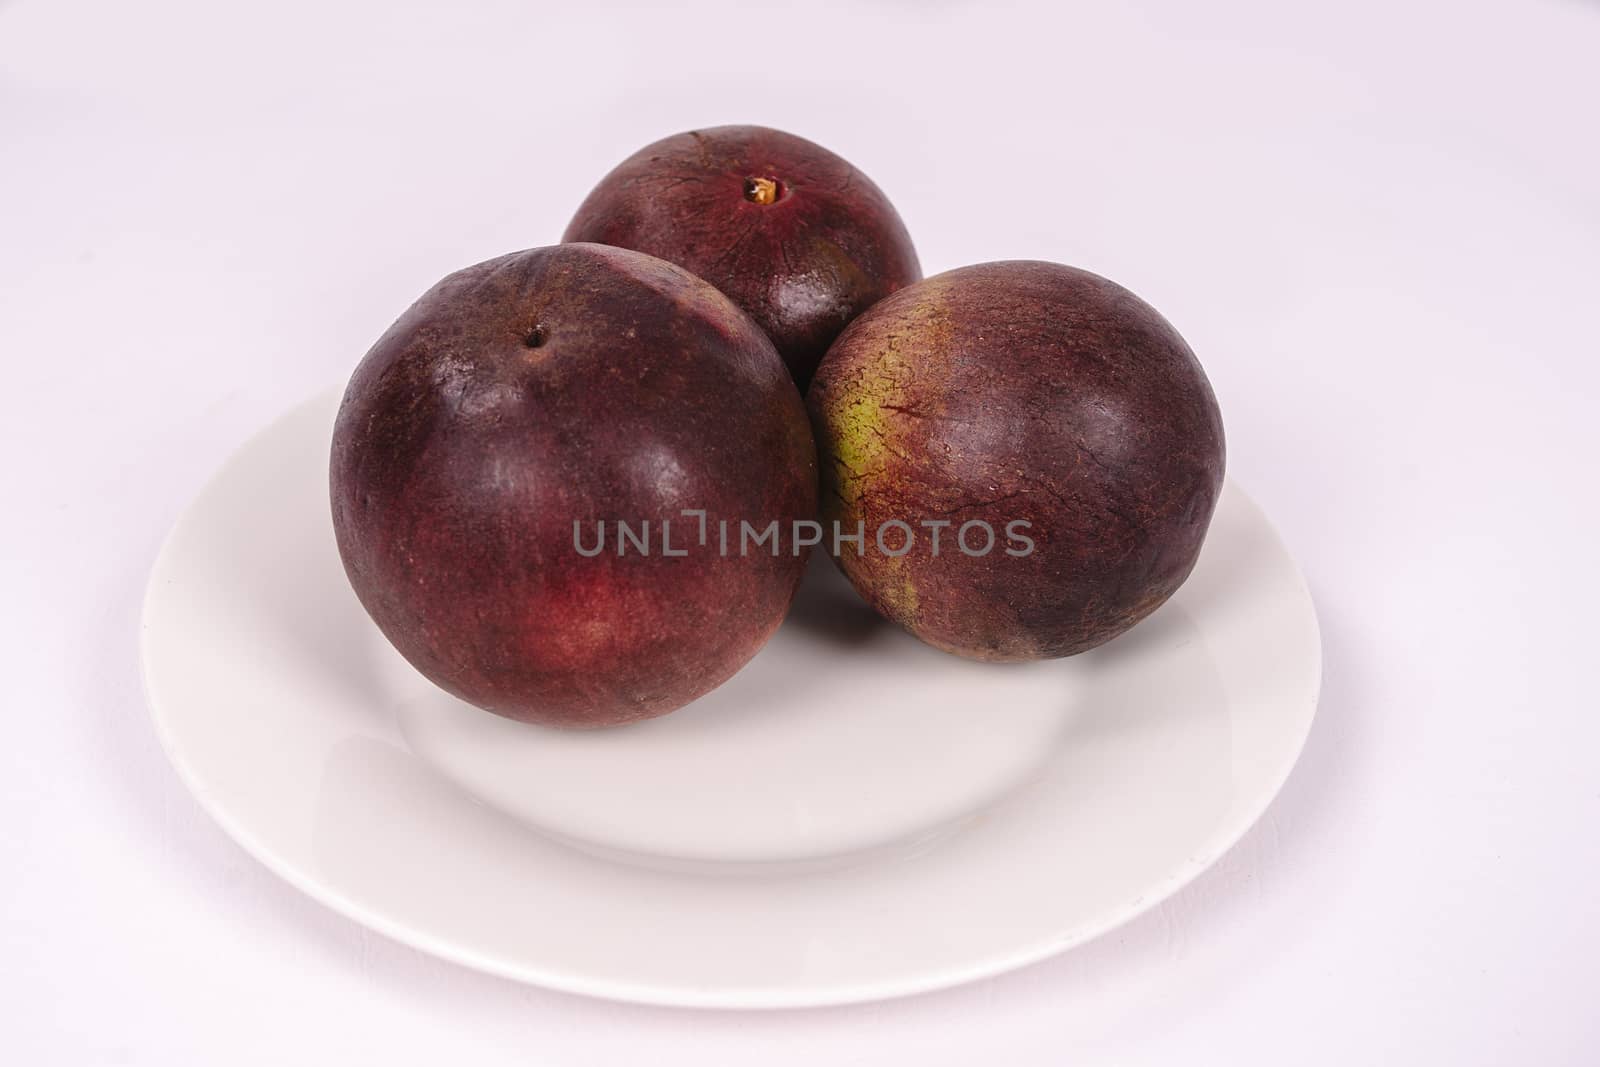 Three caimito fruits on a plate